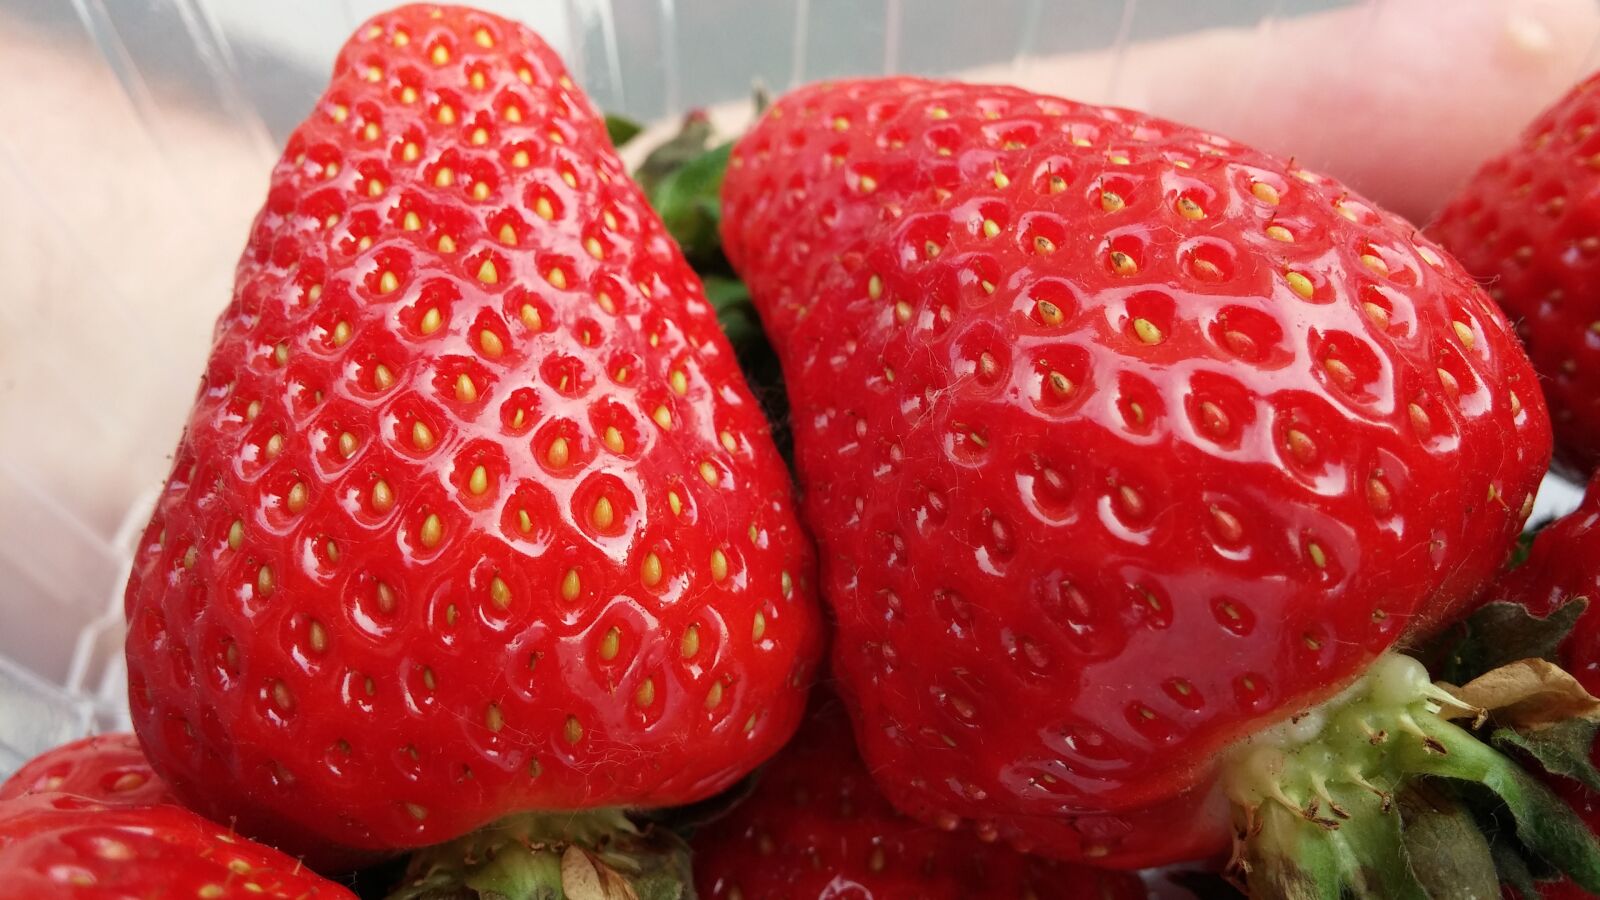 LG G2 sample photo. Strawberry, fruit, summer photography